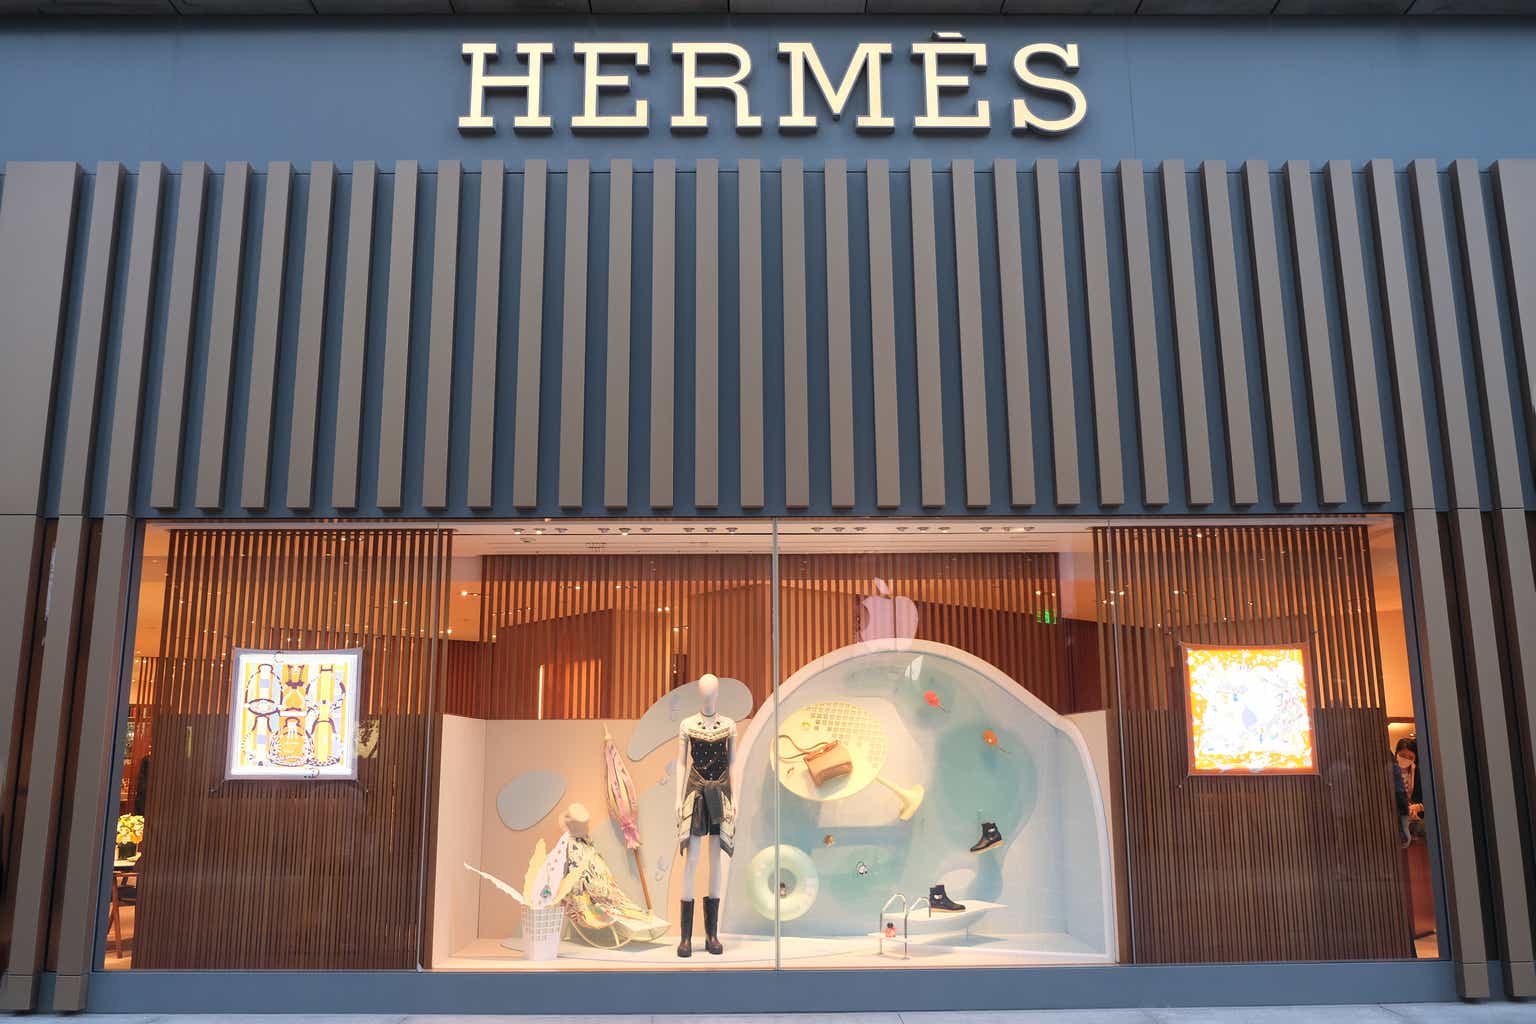 Hermes plans big price rises, says no sign of slowdown